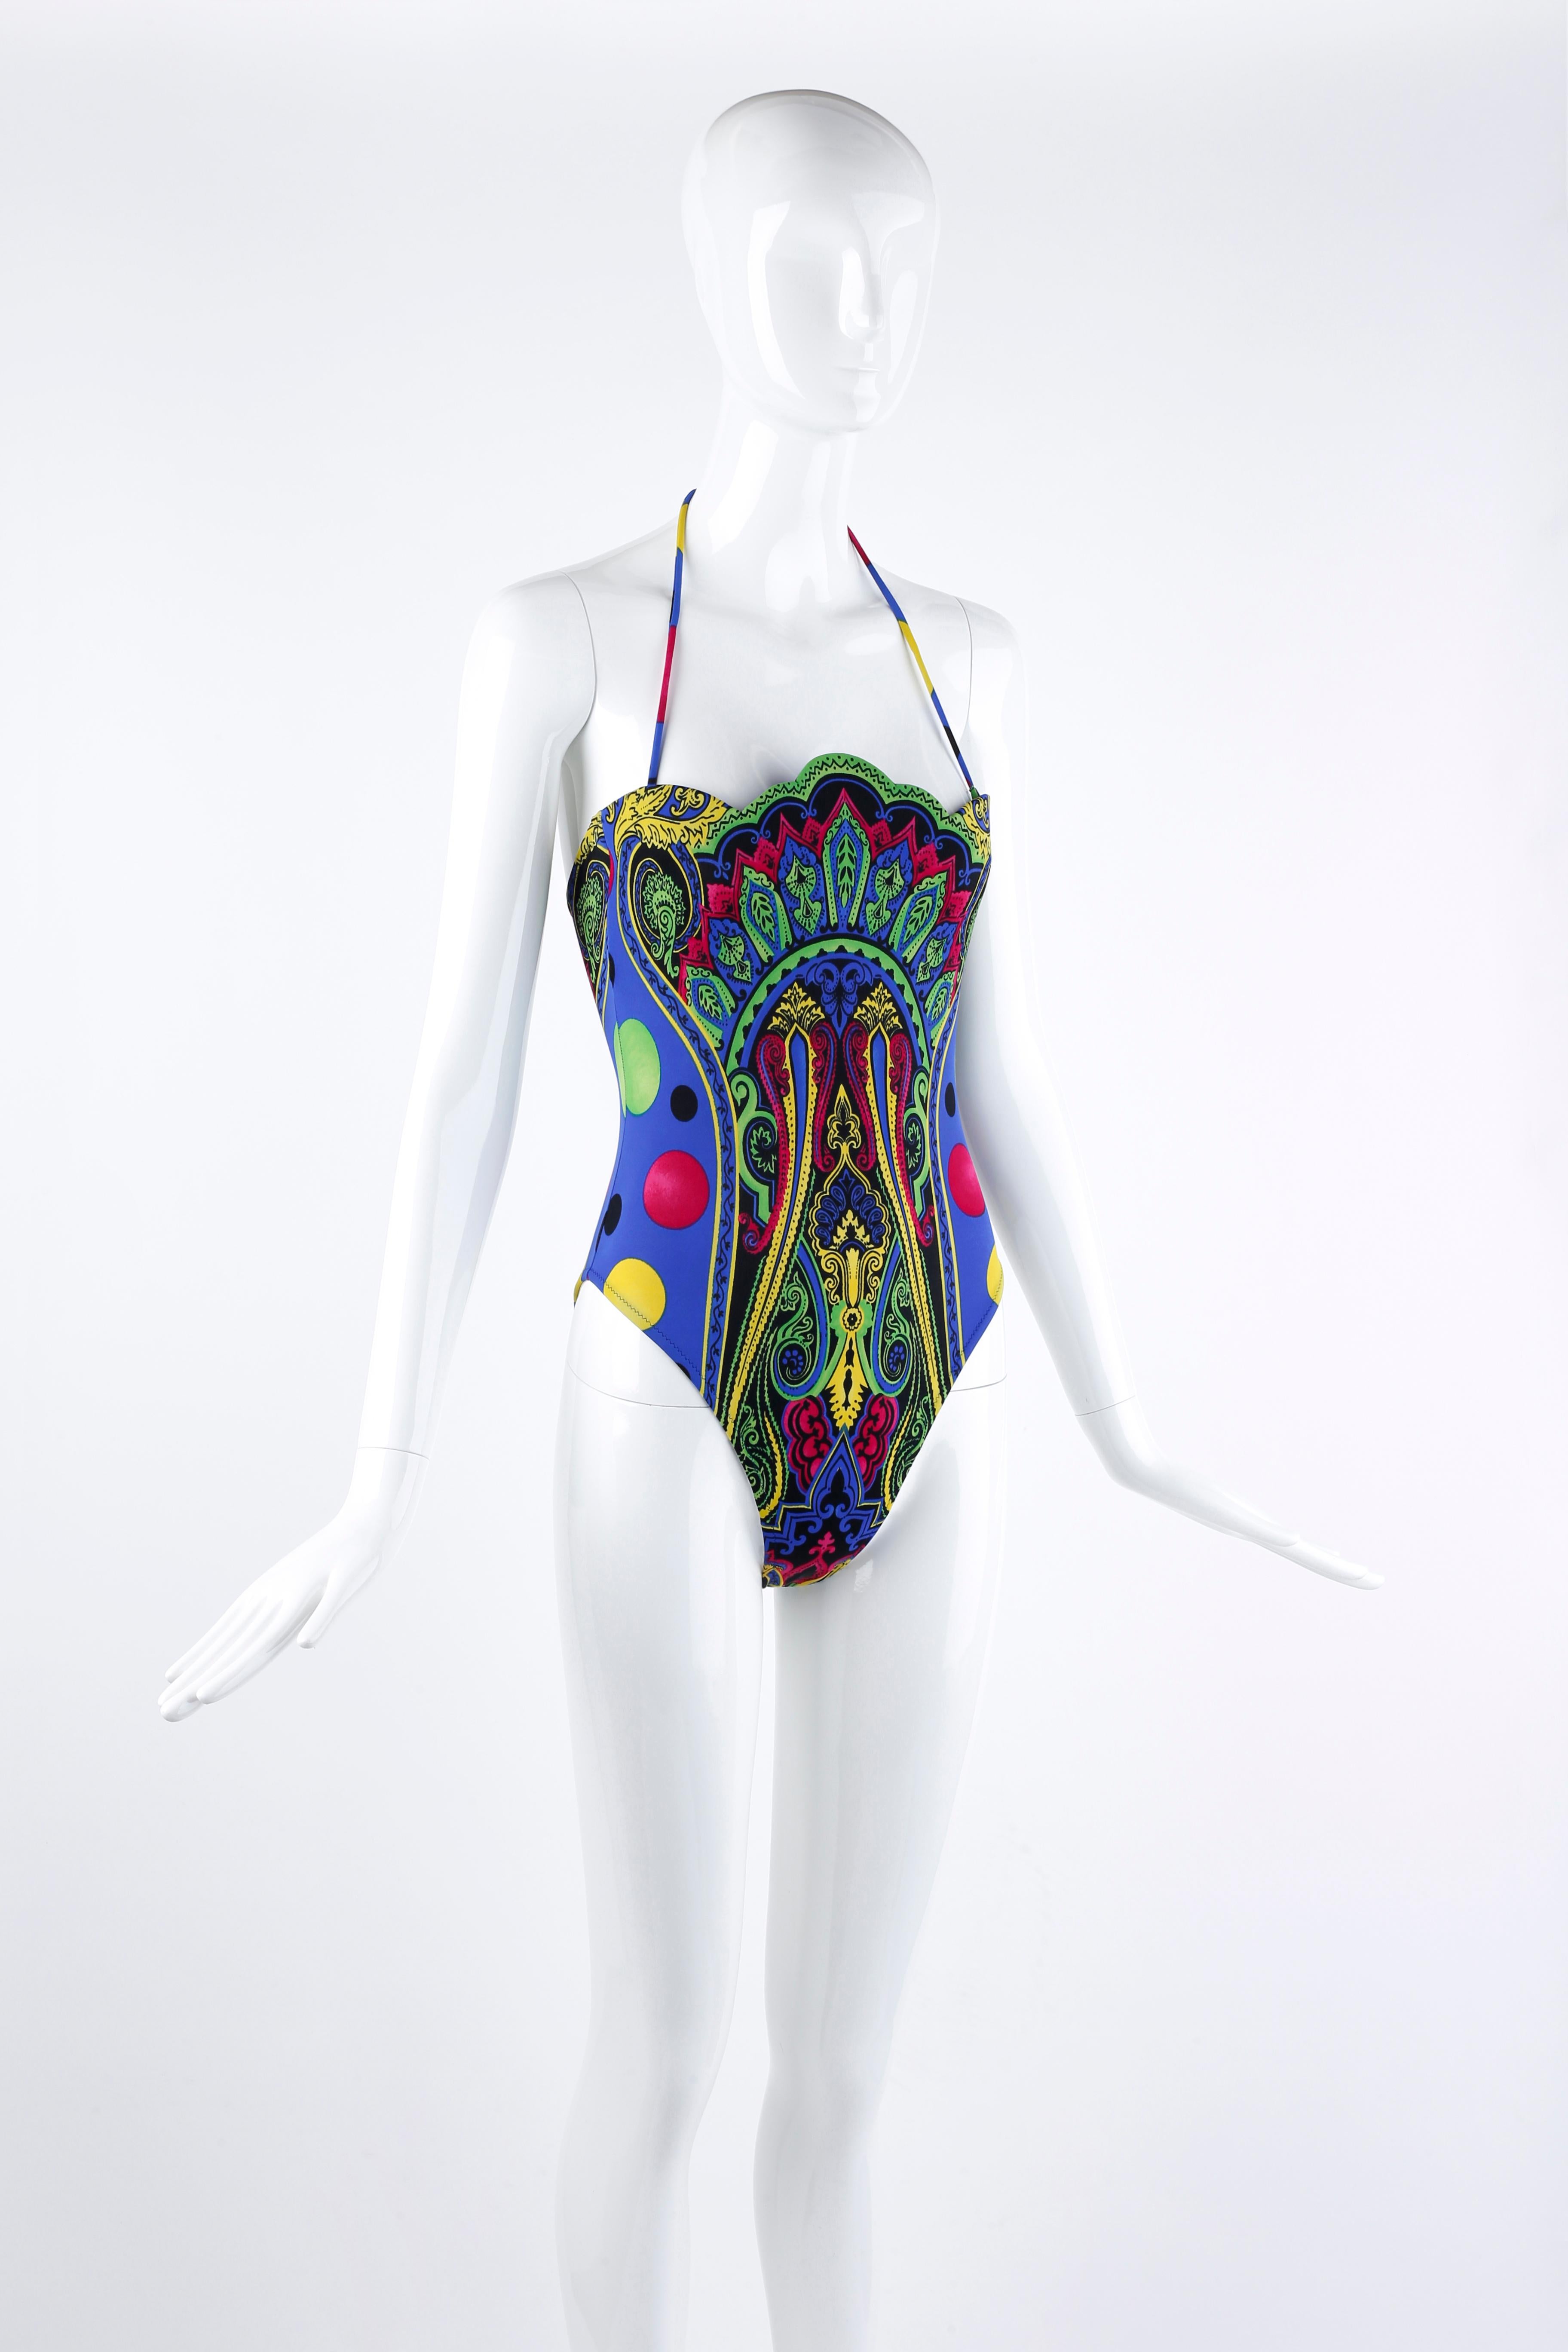 Gianni Versace S/S 1991 Pop Art Baroque Print Swimsuit Bodysuit & Skirt Set For Sale 1